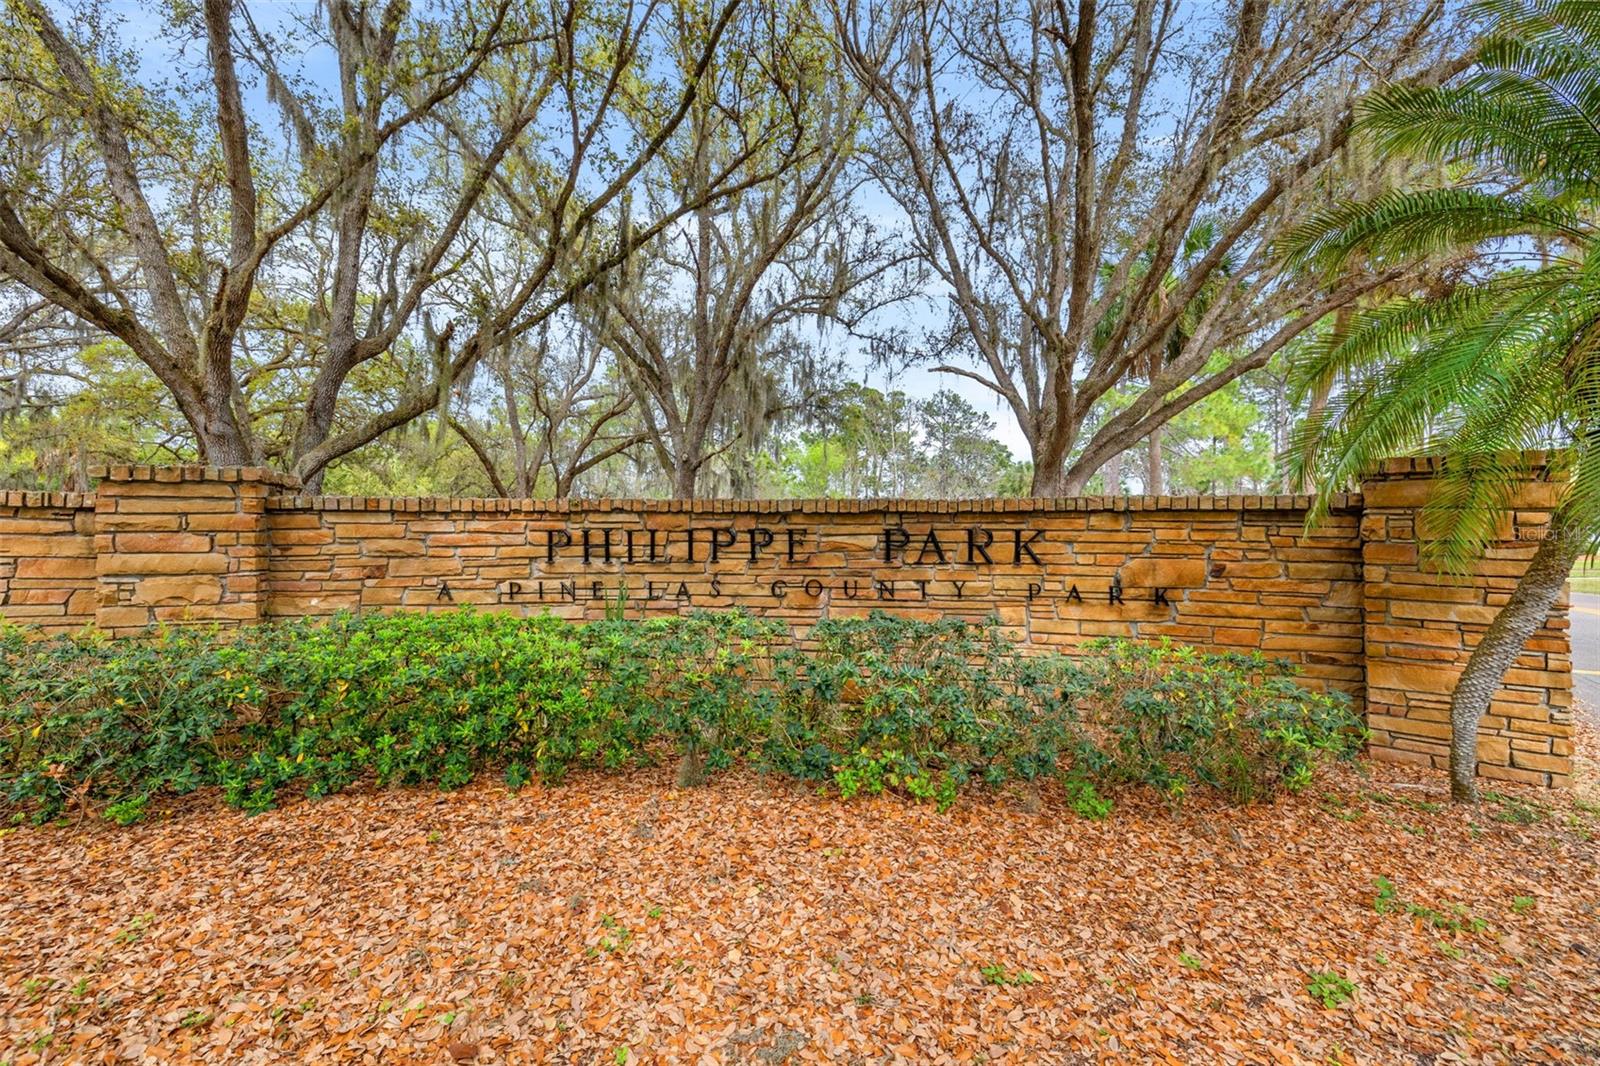 Philipee Park (within 1 mile)